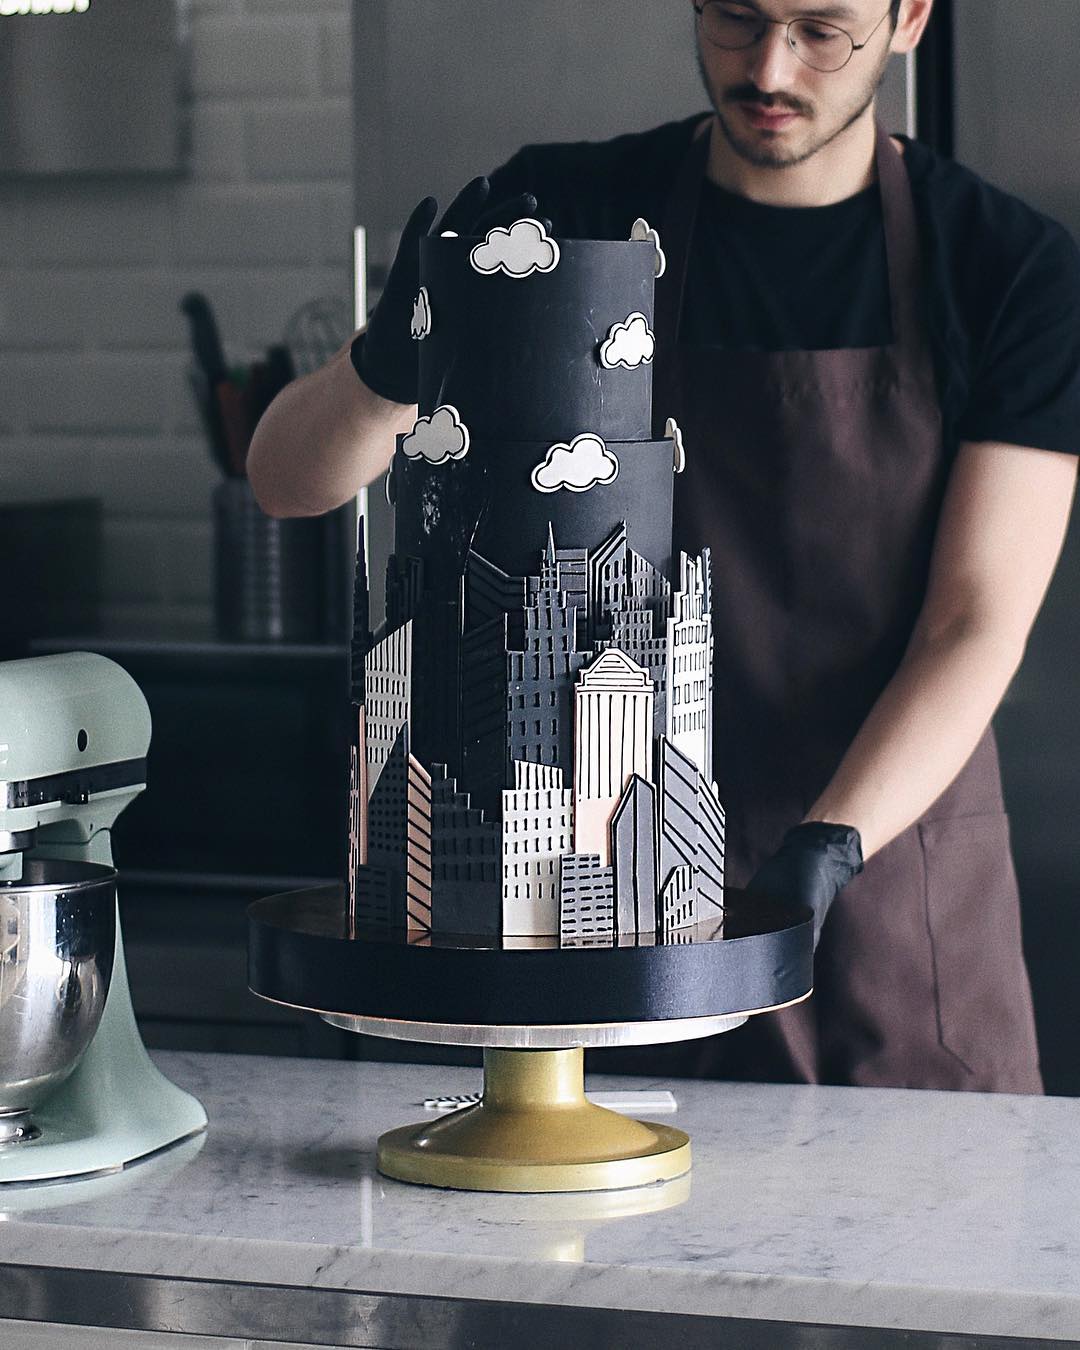 Tortik-Annushka Top 30 Best Cake Designers in the World 2021/2022